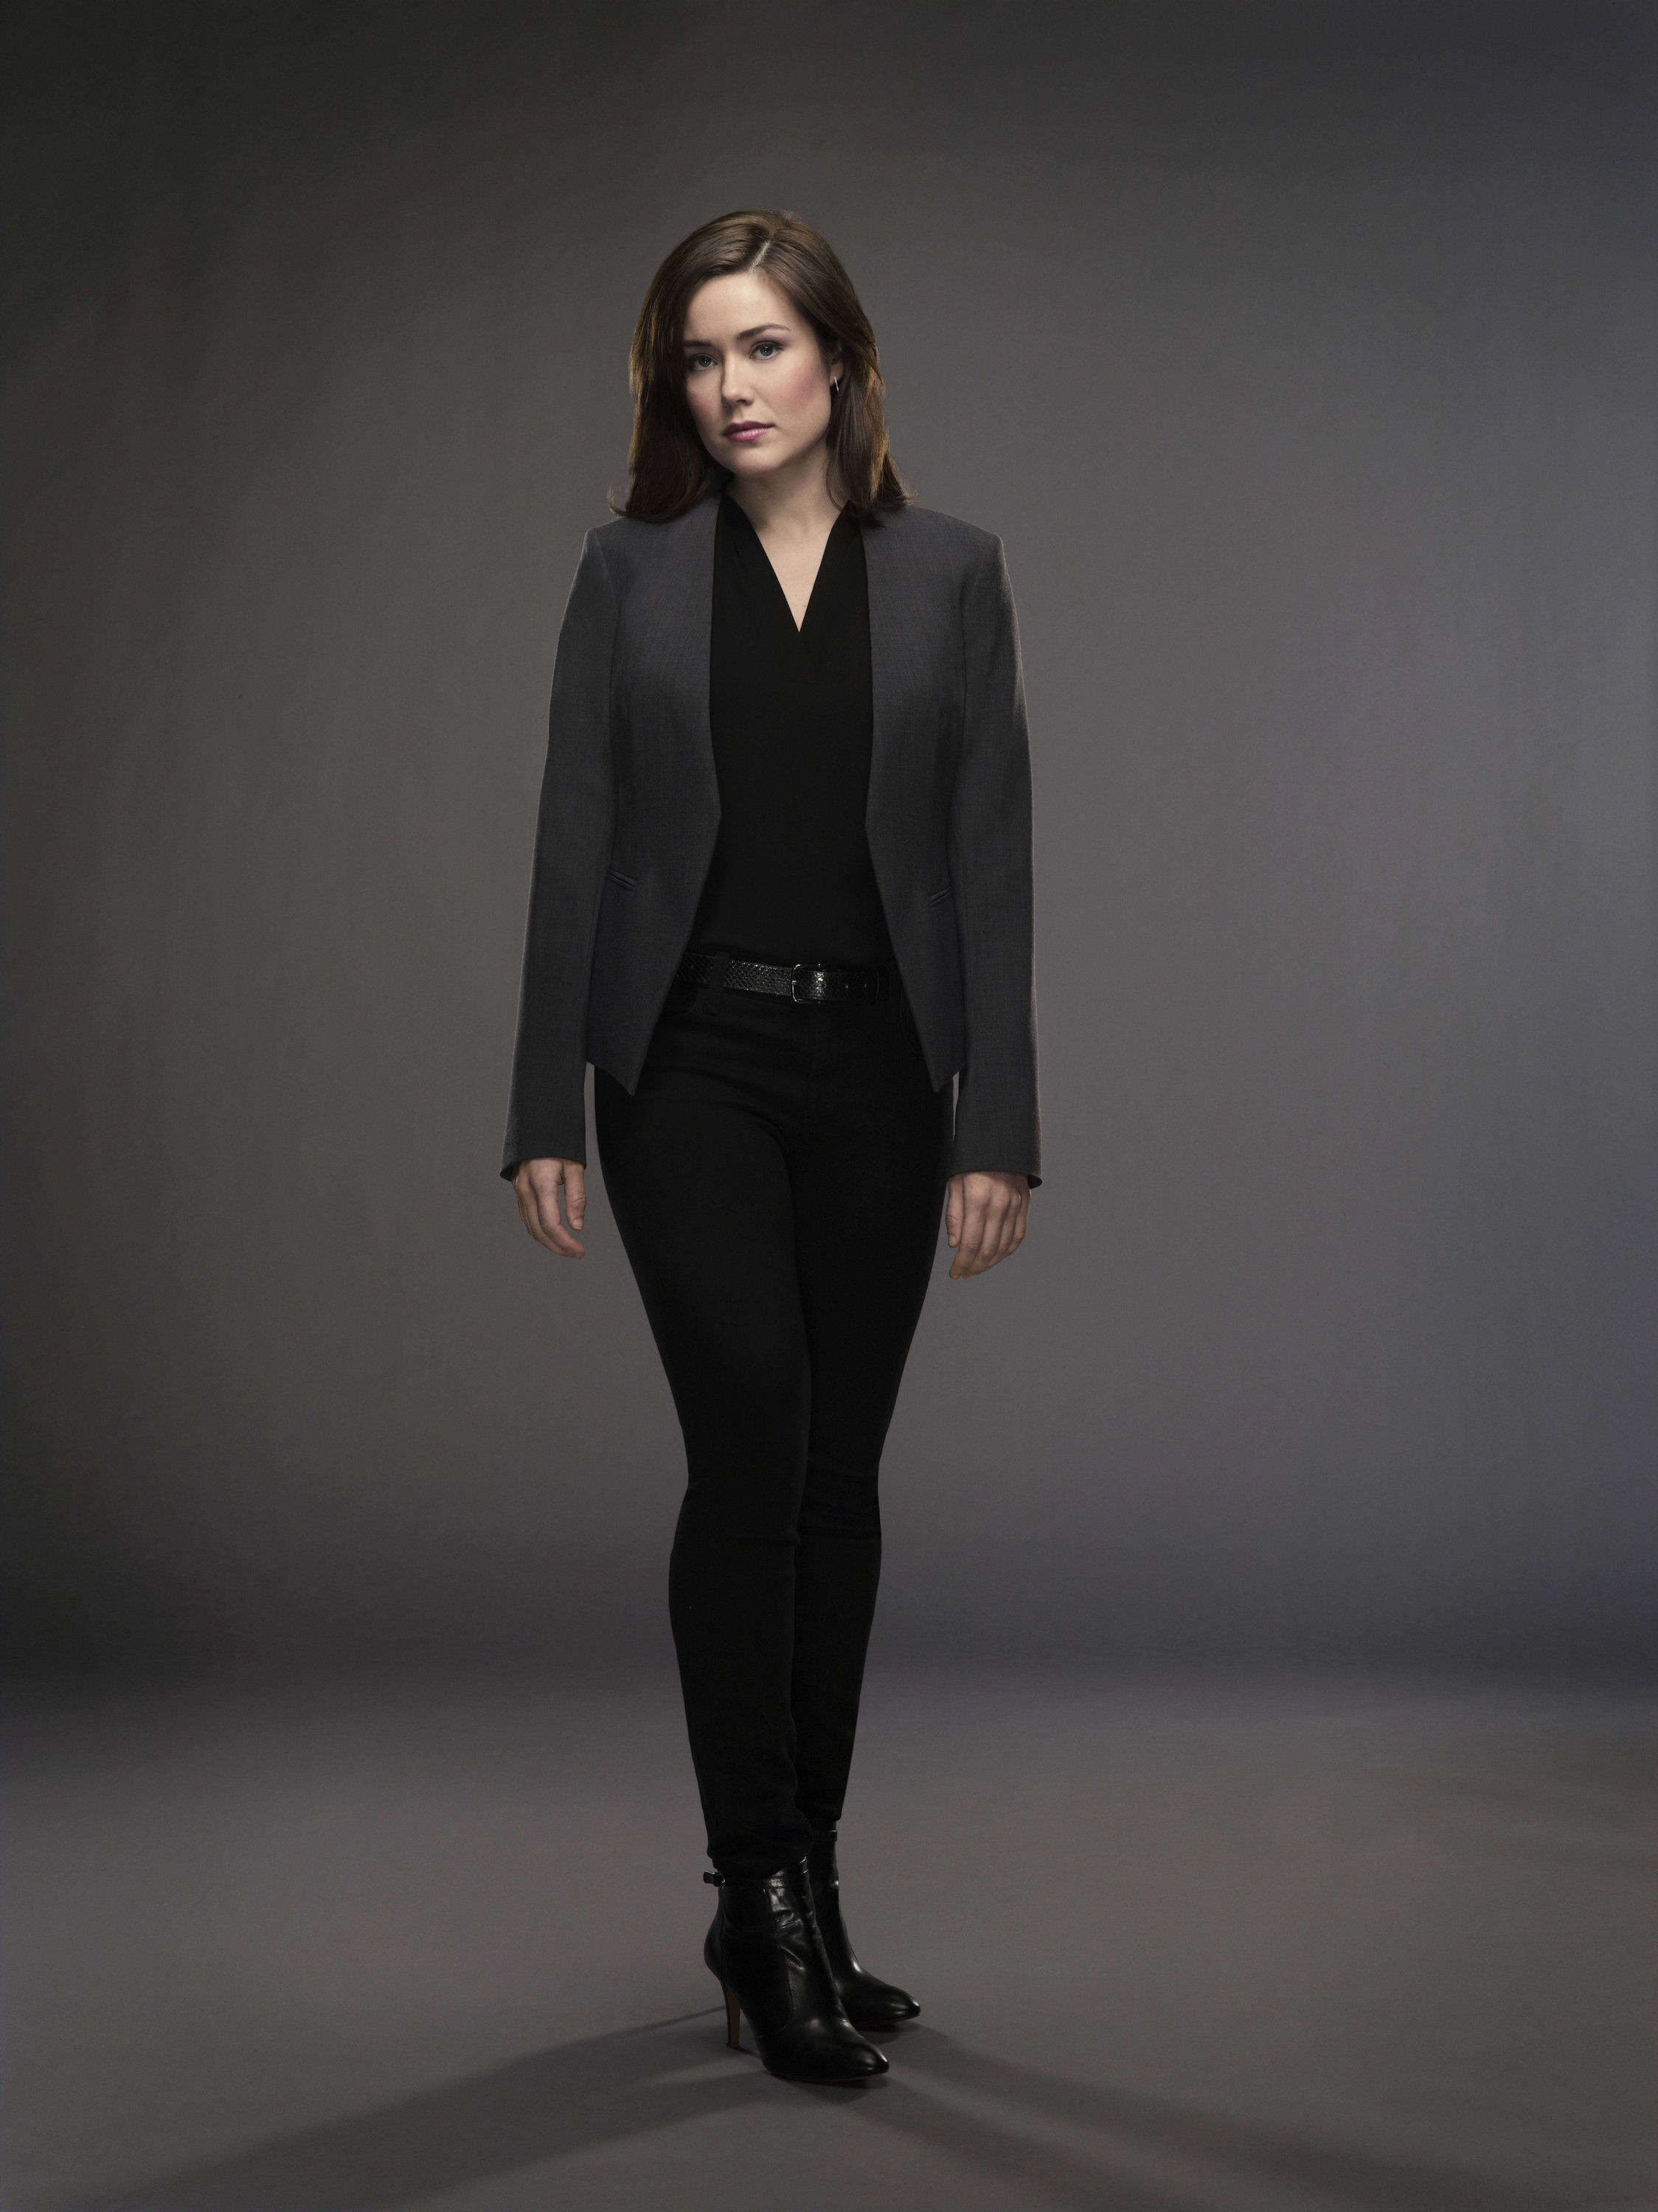 The Blacklist Wallpaper With A Business Suit, A Suit, - Blacklist Elizabeth Keen Outfits , HD Wallpaper & Backgrounds